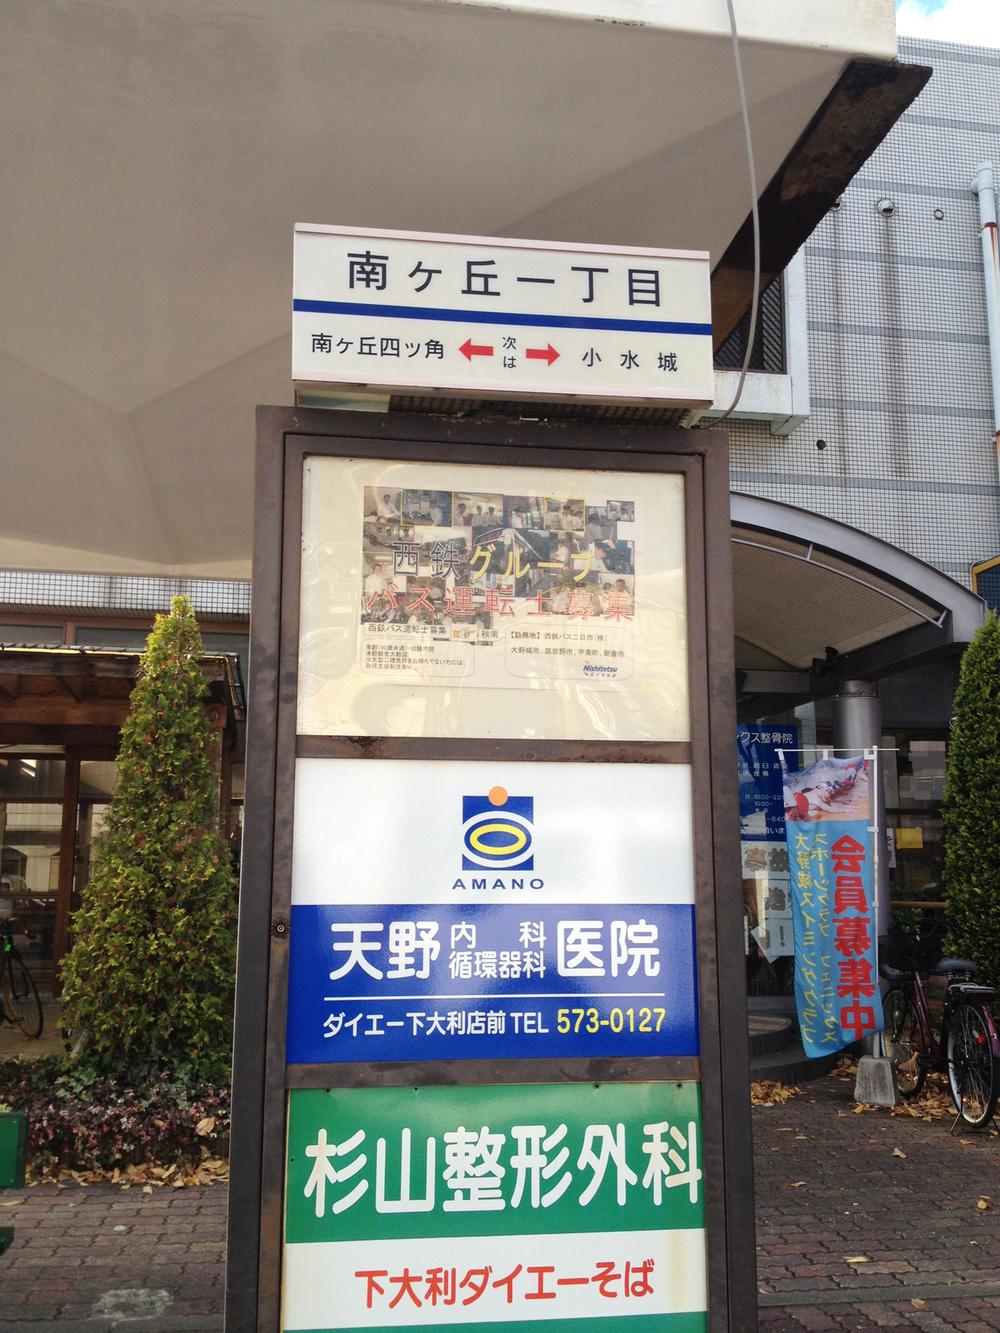 Other. The nearest bus stop (1-chome Minamikeoka)